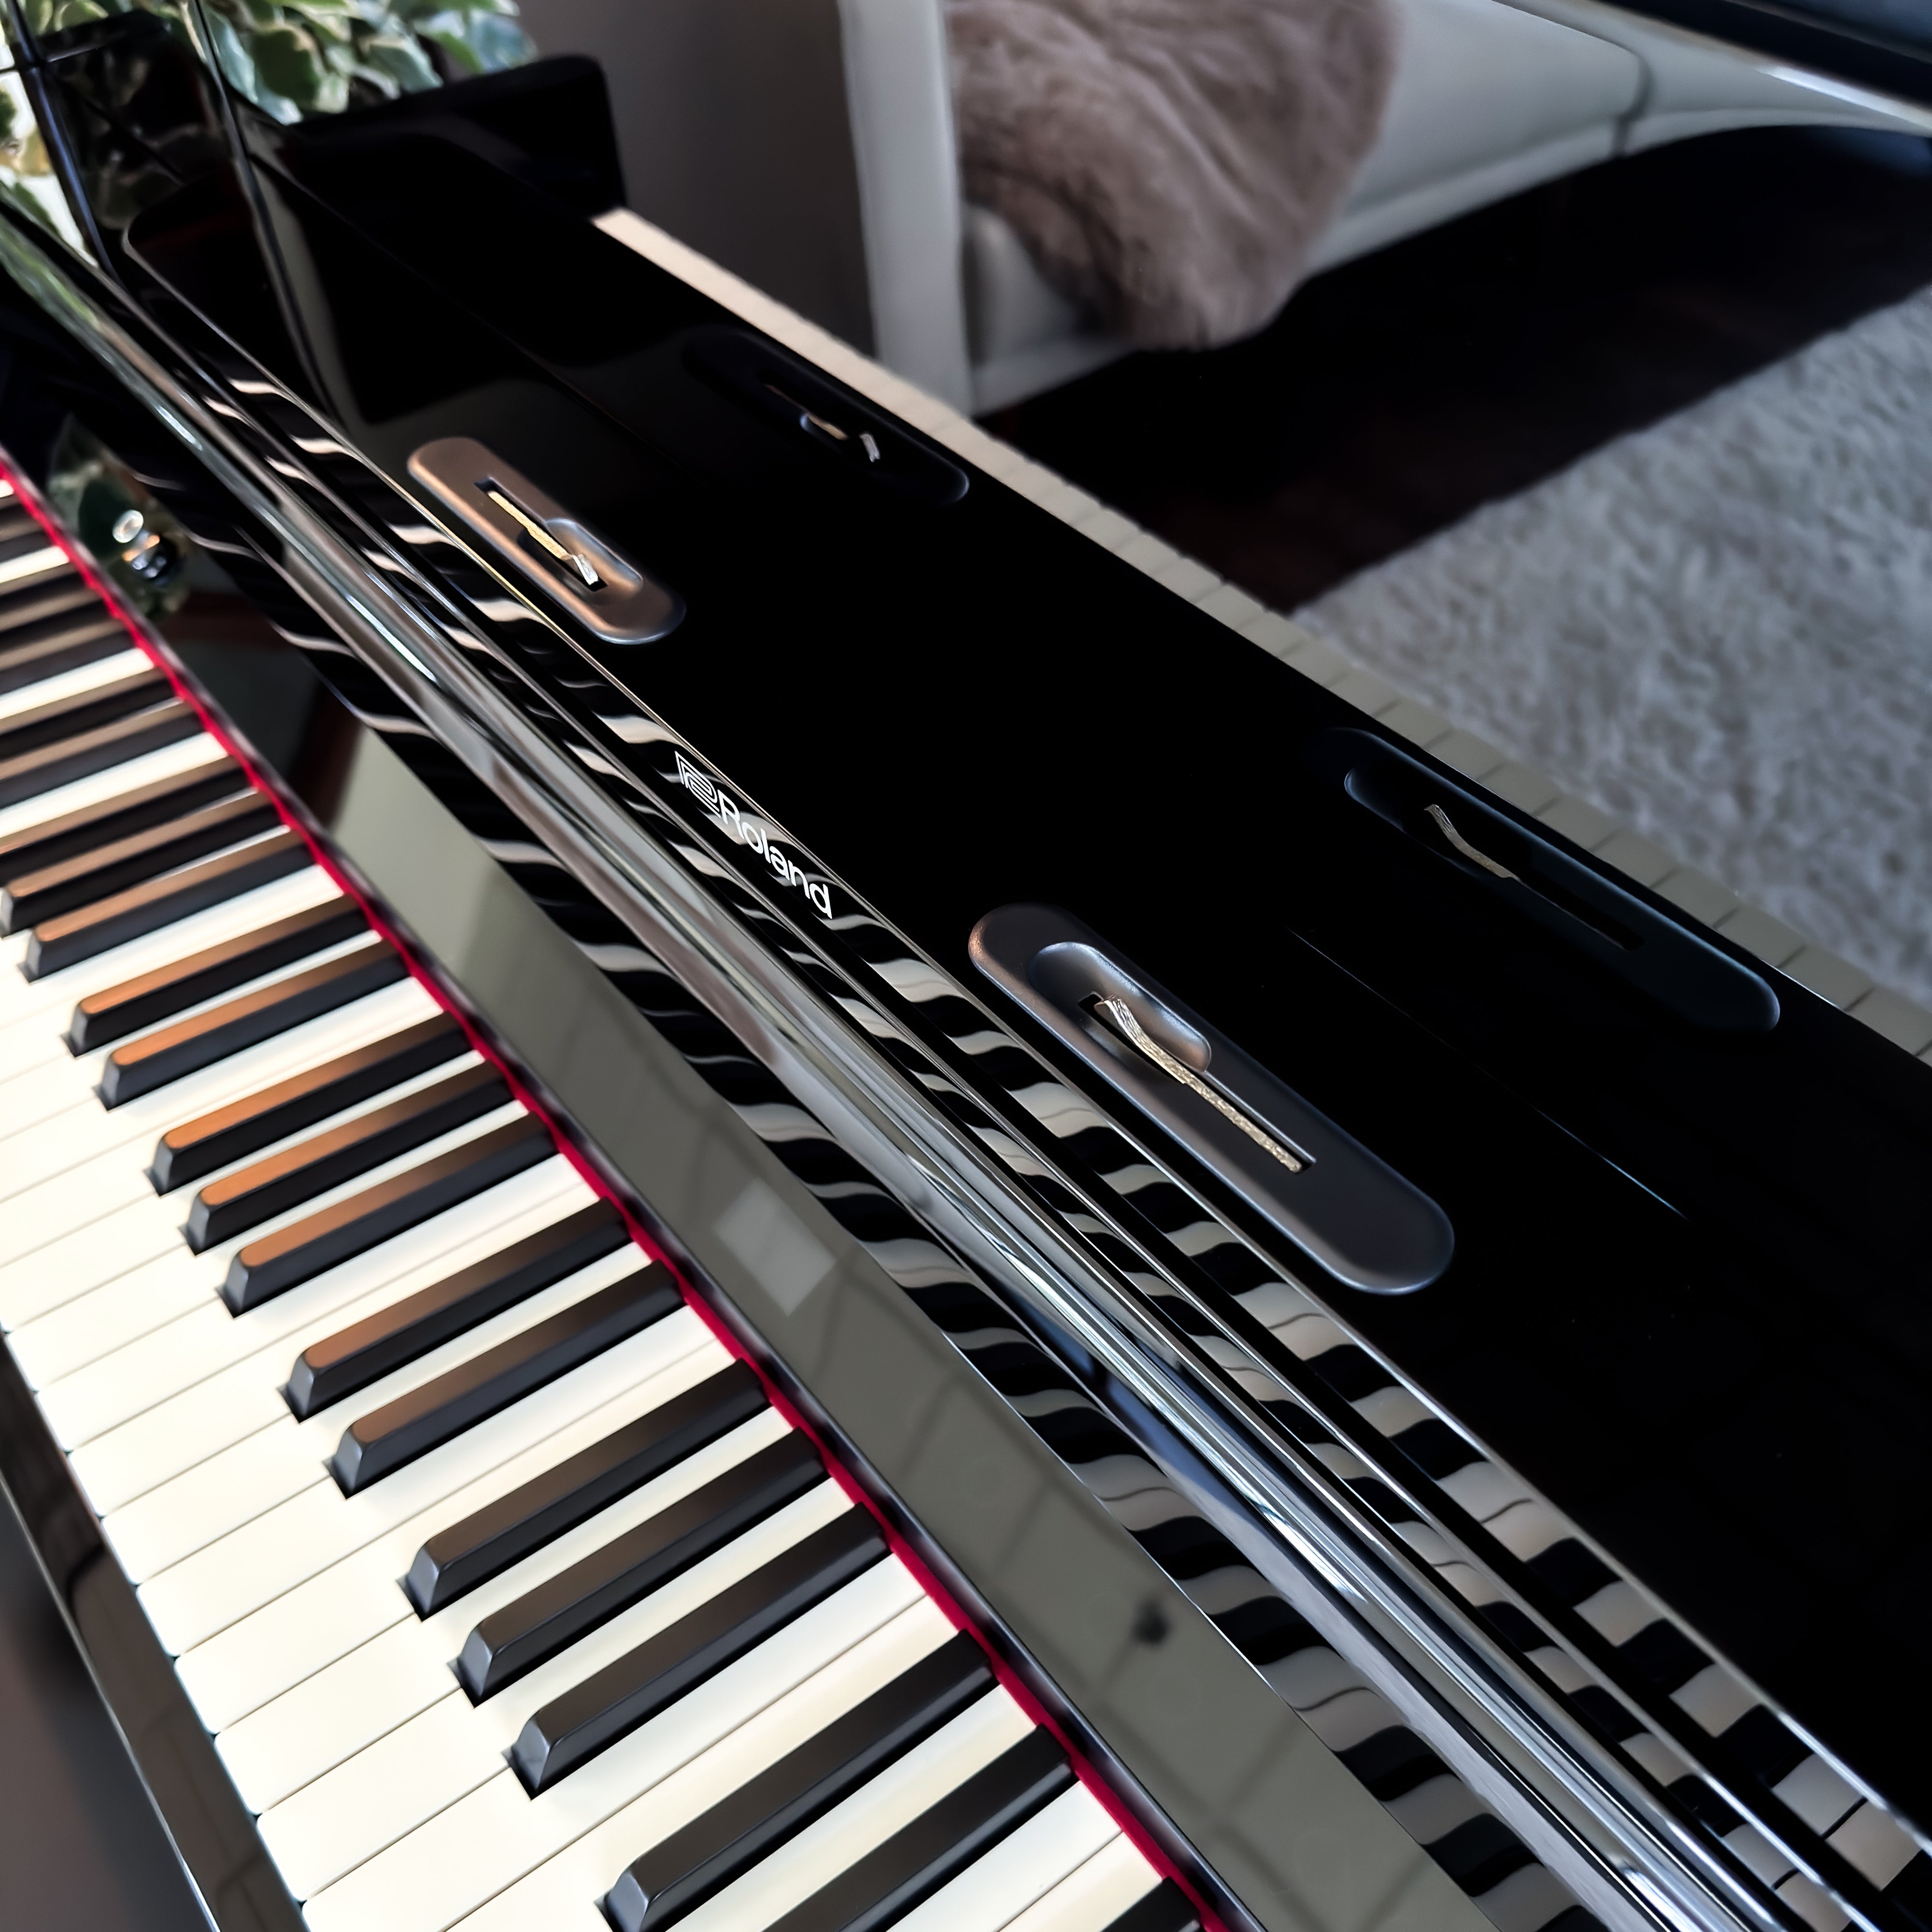 Roland LX-6 Digital Piano with Bench - Polished Ebony, View 6